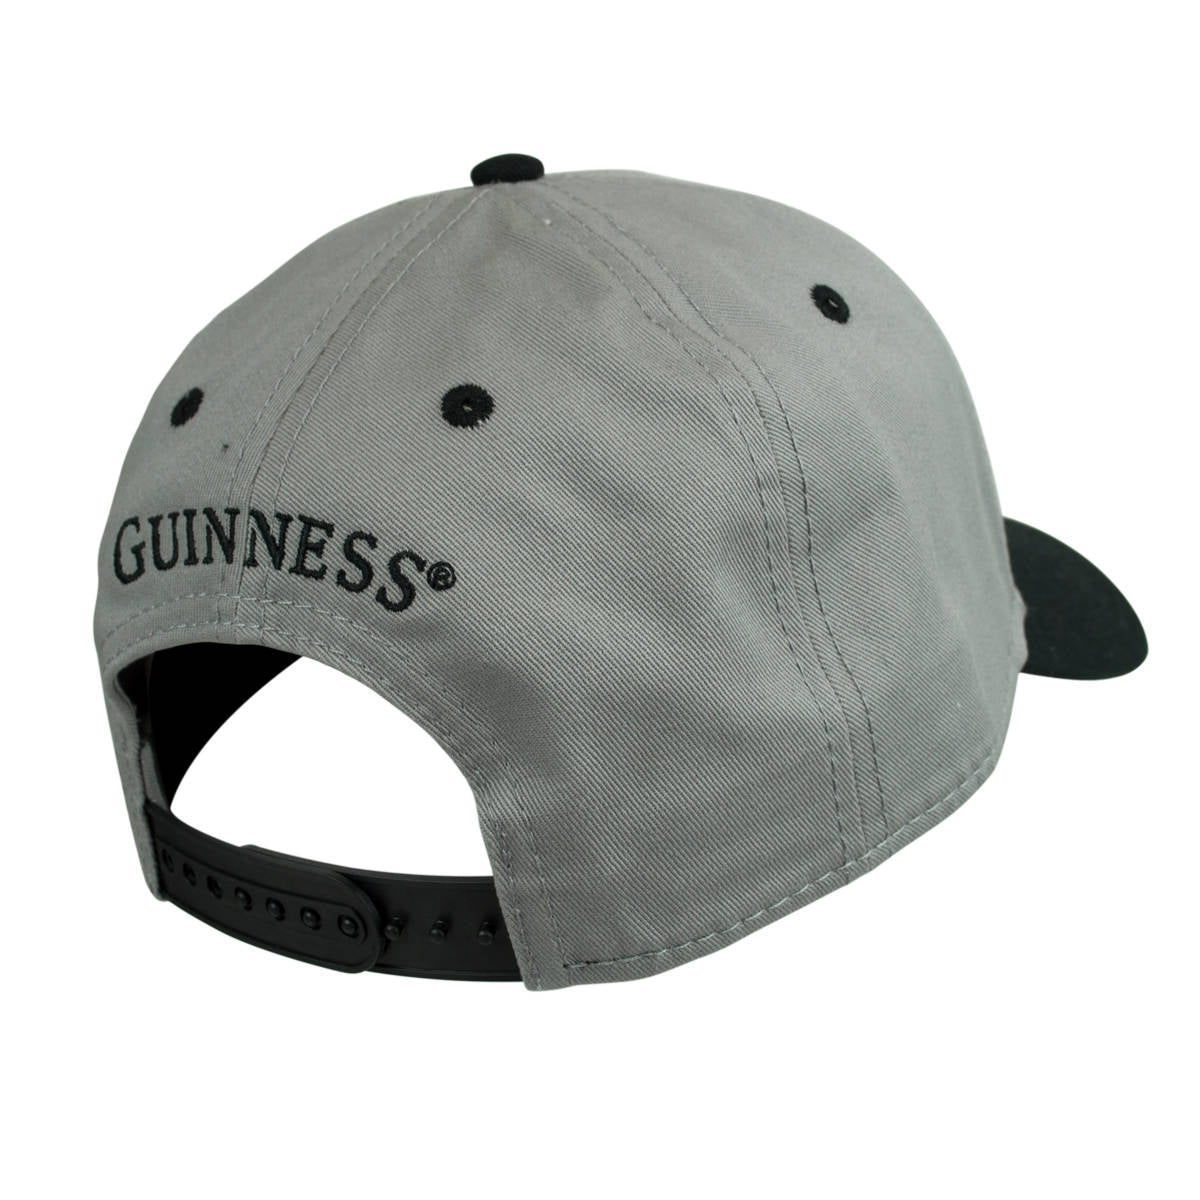 An adjustable Guinness Grey 59 Baseball Cap (Adjustable)